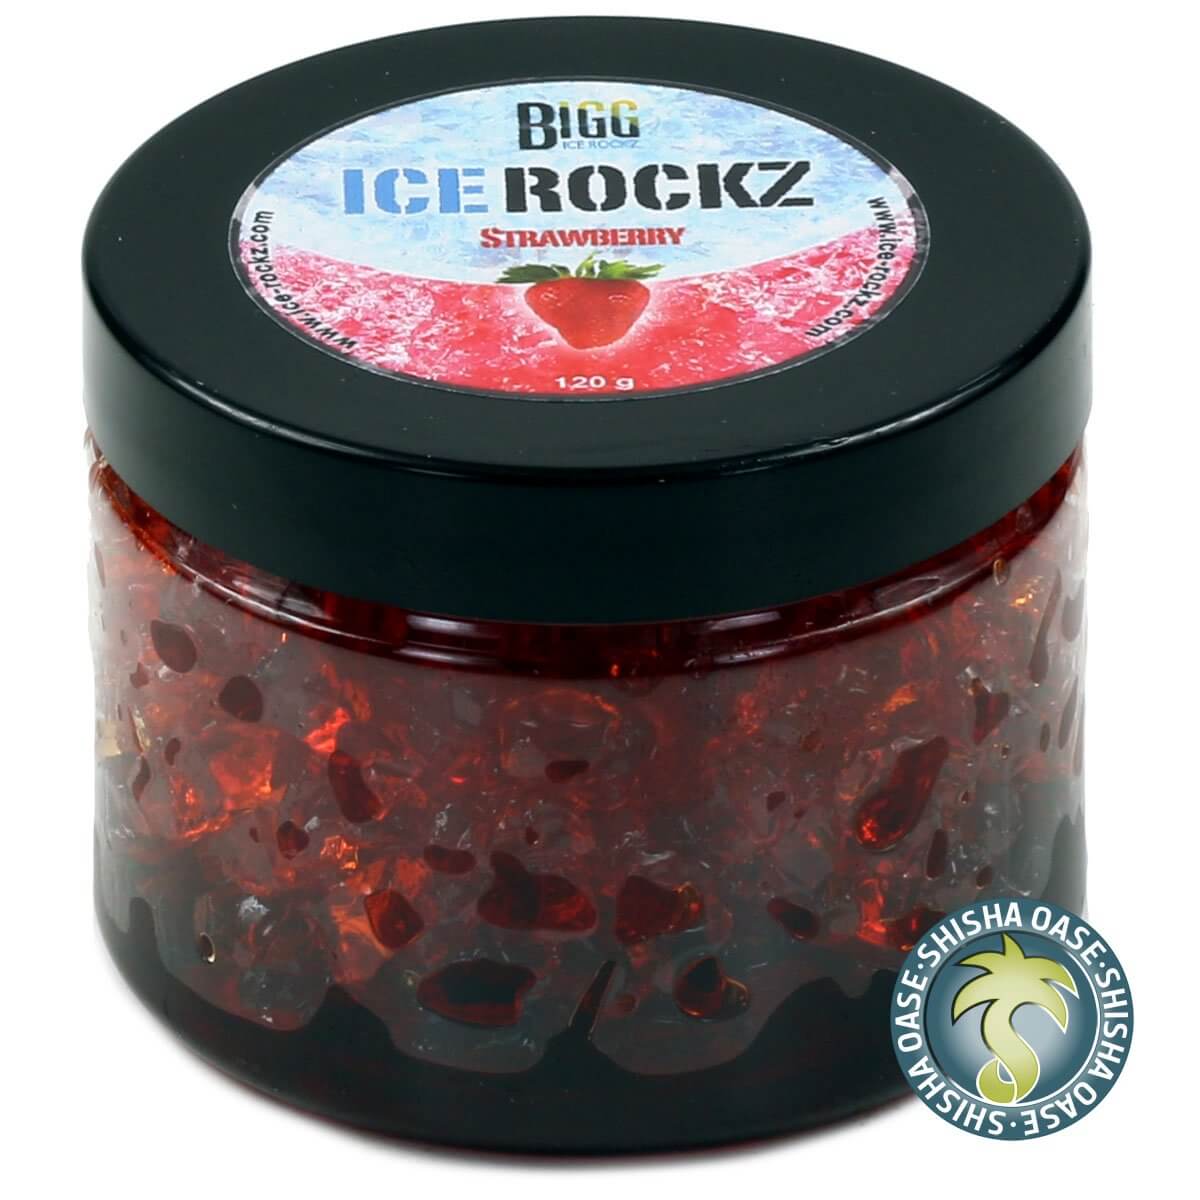 Bigg Ice Rockz - Strawberry 120g